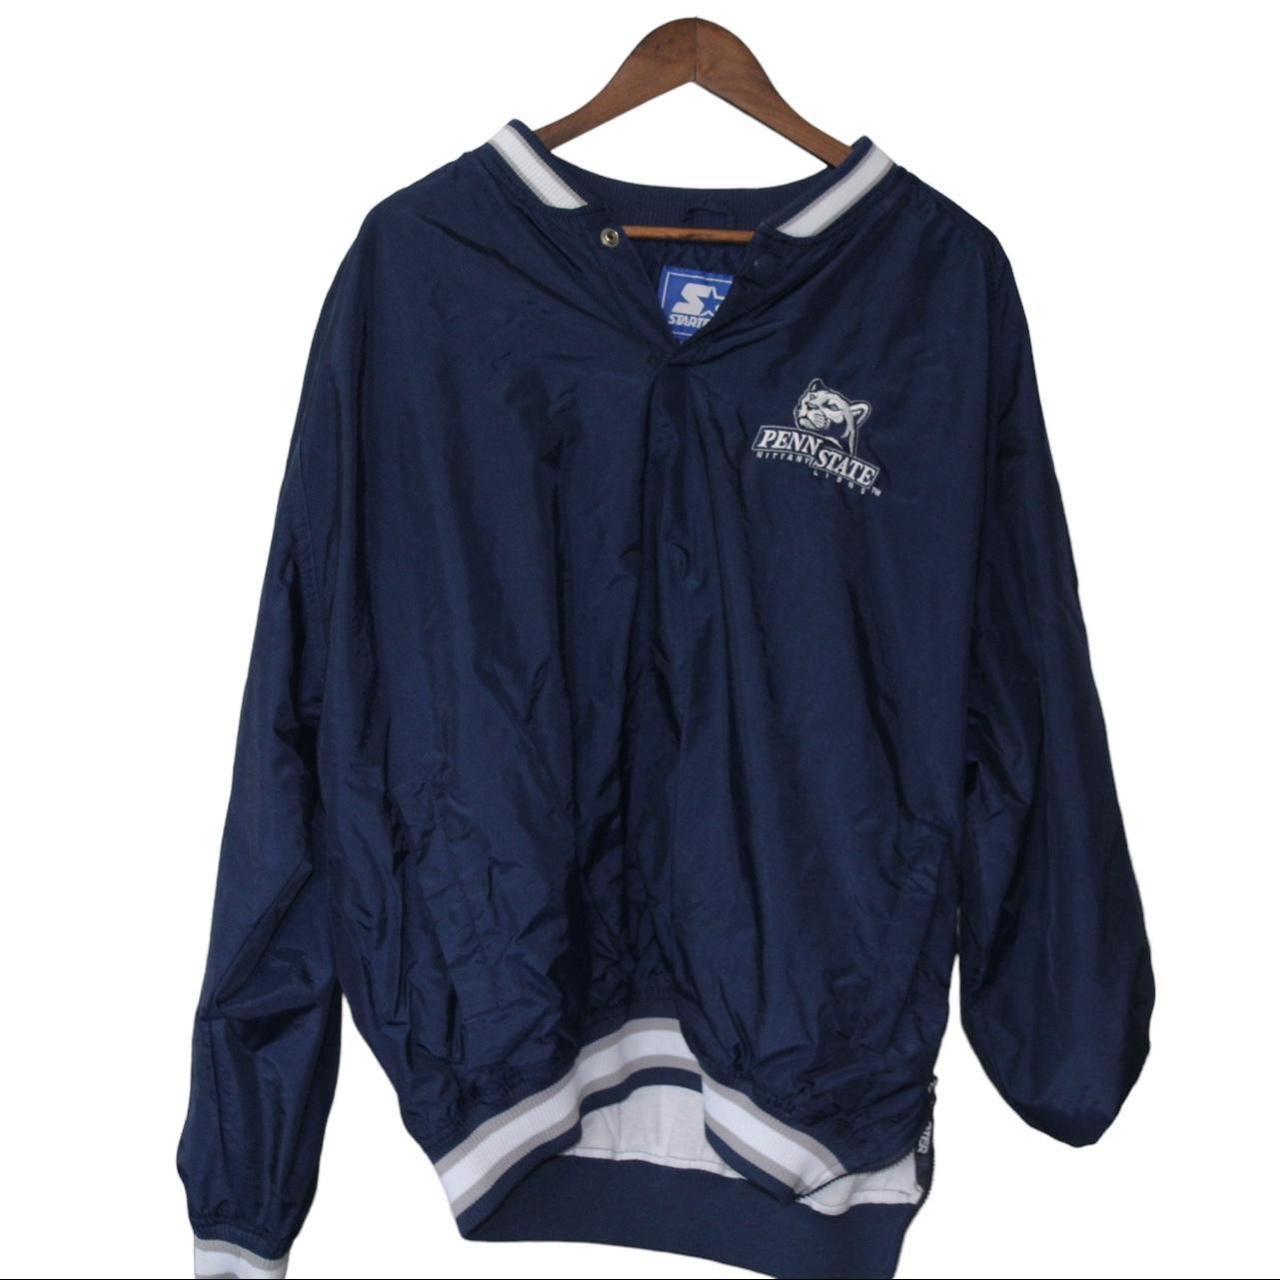 Men's Penn State Navy Blue Varsity Jacket